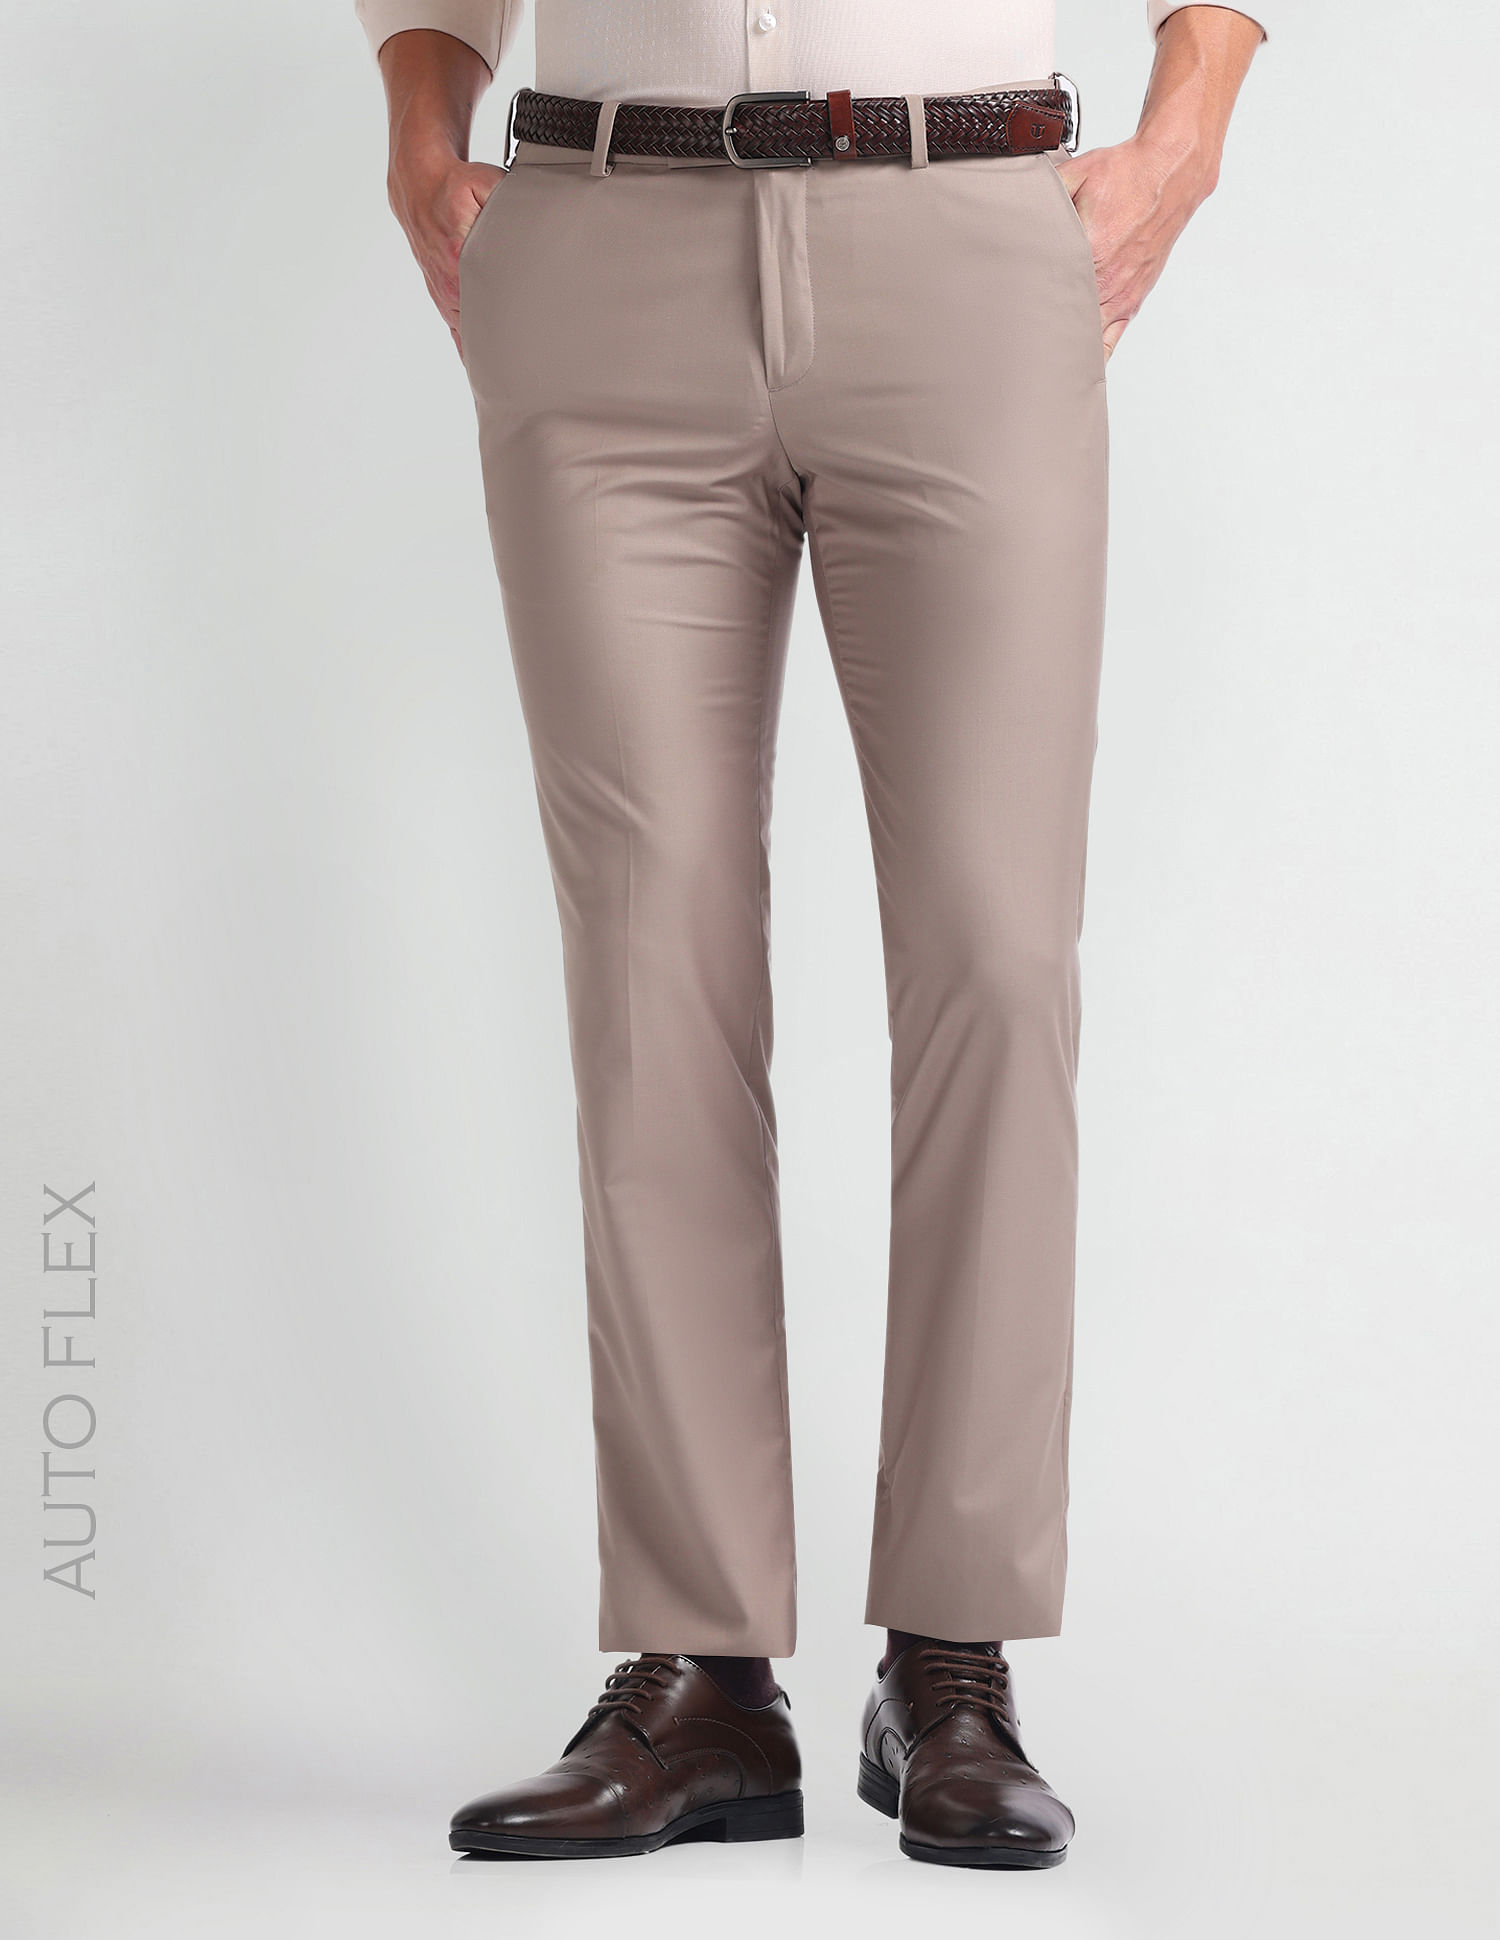 Buy Beige Trousers & Pants for Men by ARROW Online | Ajio.com